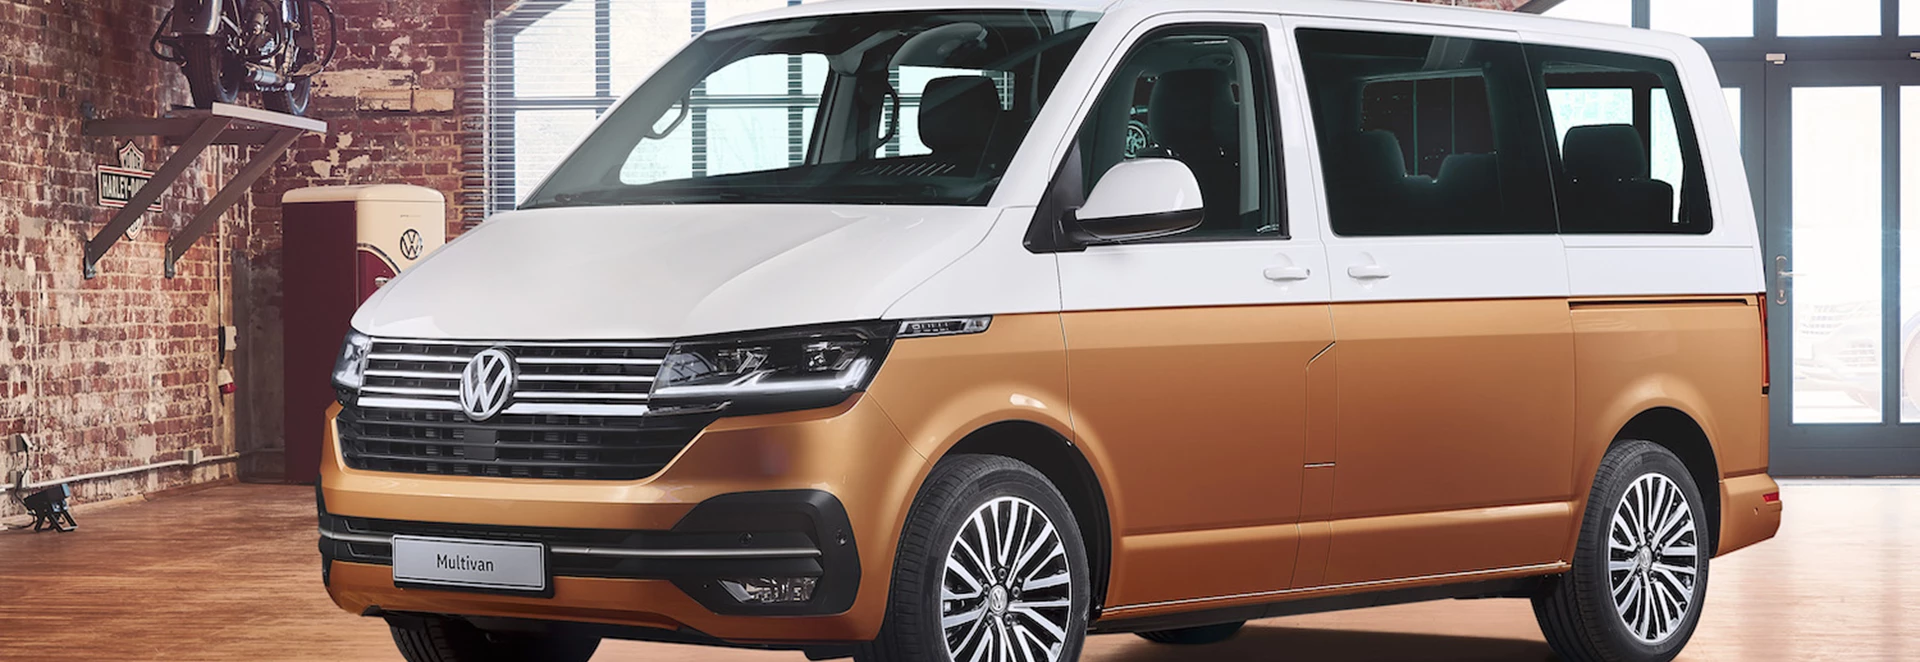 Updated Volkswagen Transporter 6.1 revealed